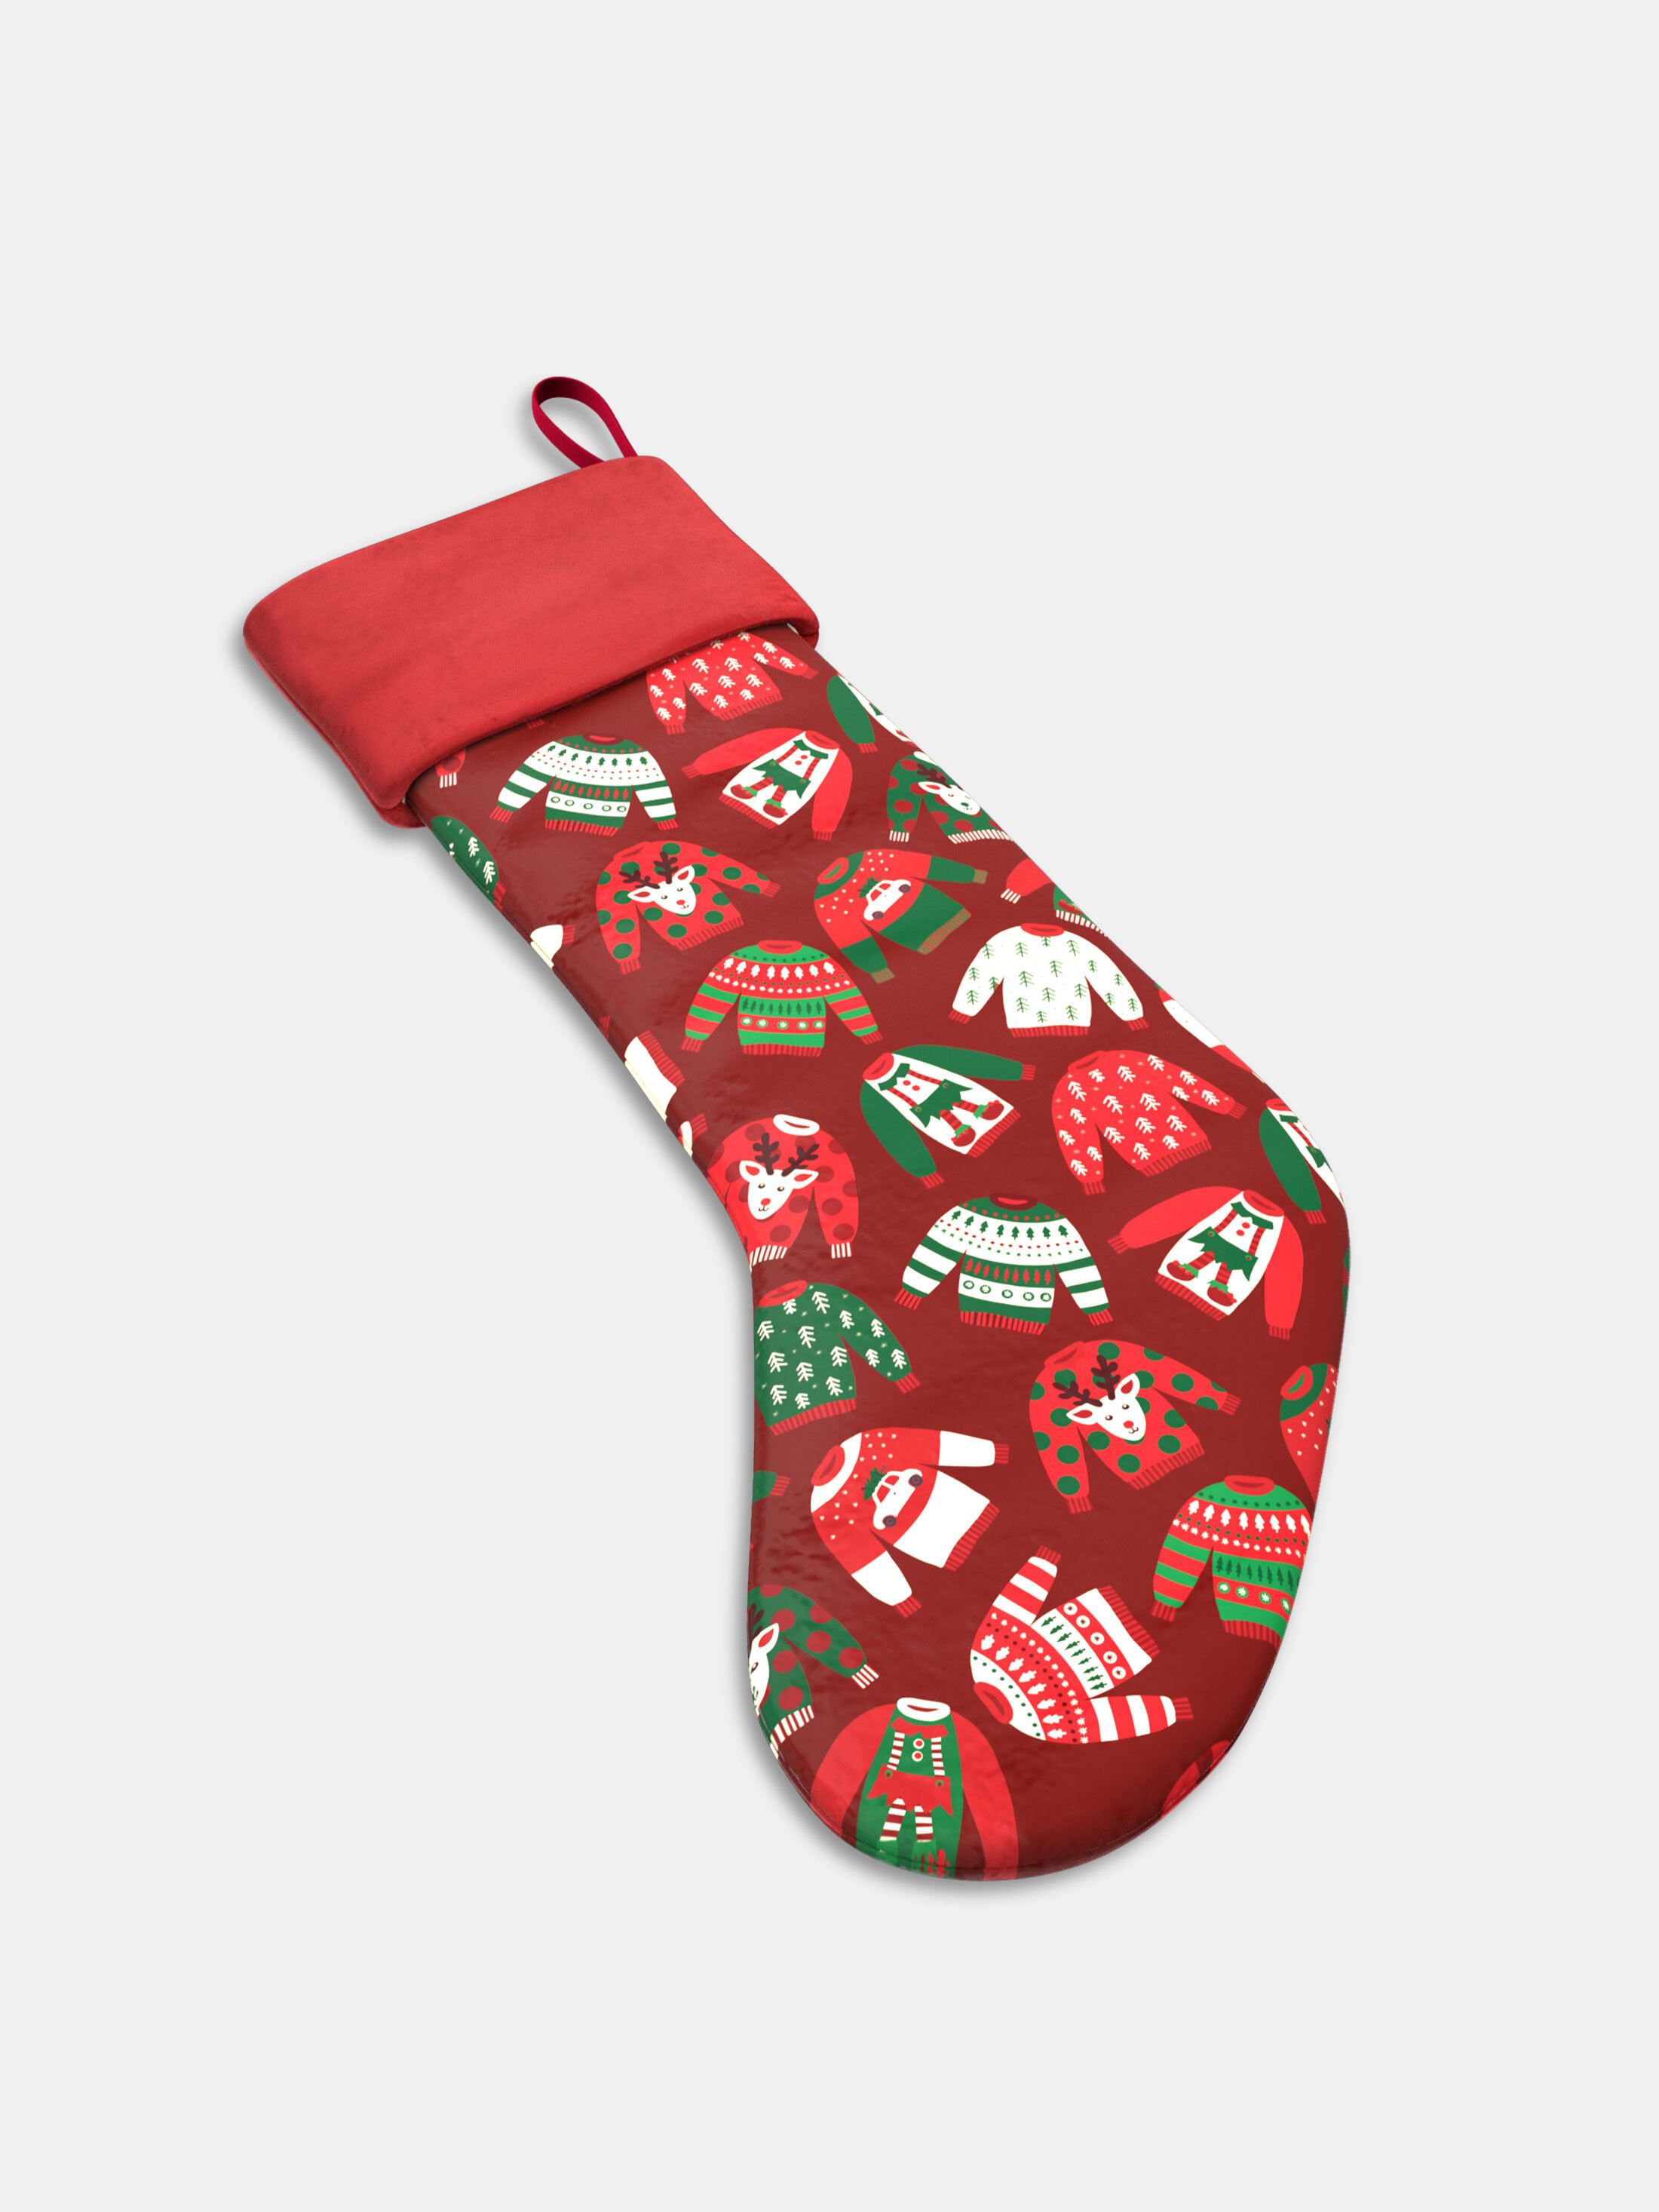 custom christmas stockings printed with a cute polar bear design on blue background